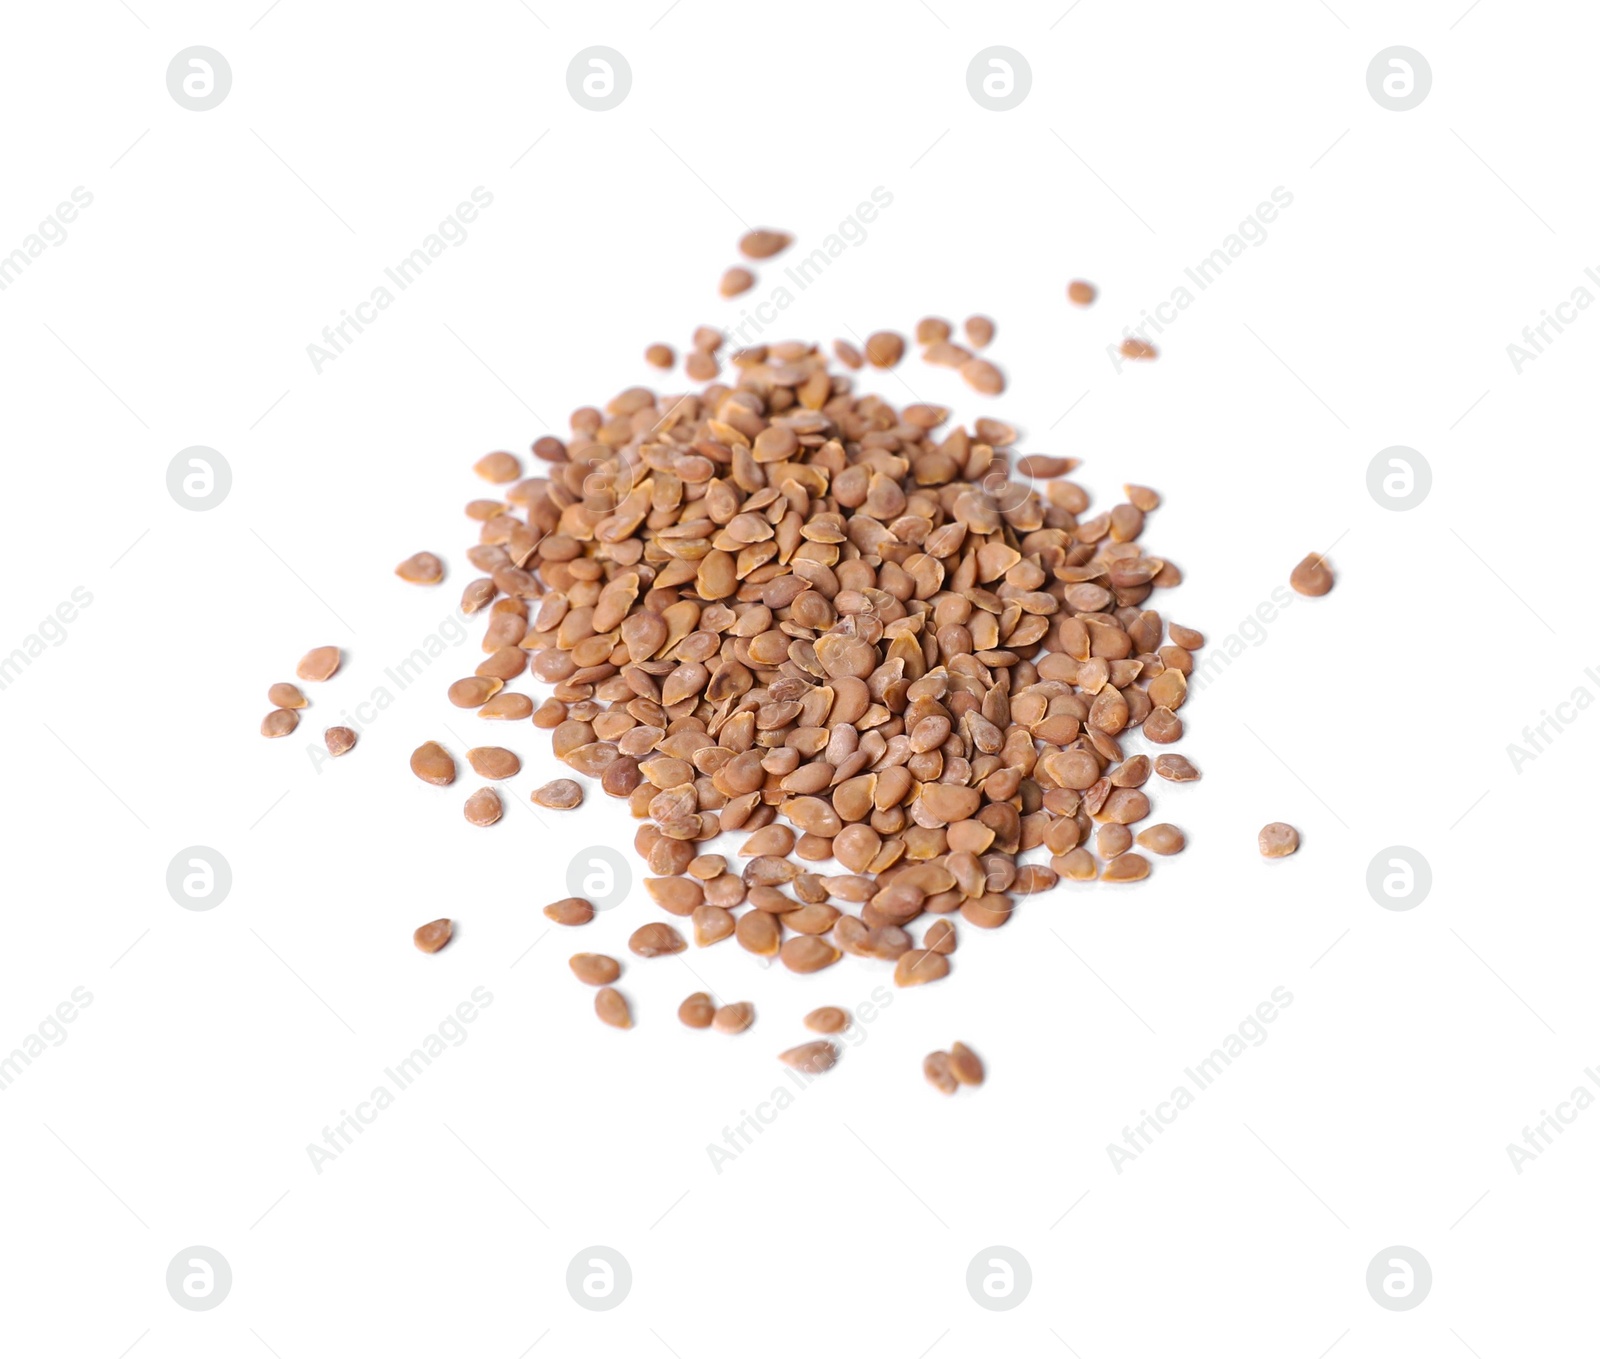 Photo of Pile of tomato seeds on white background